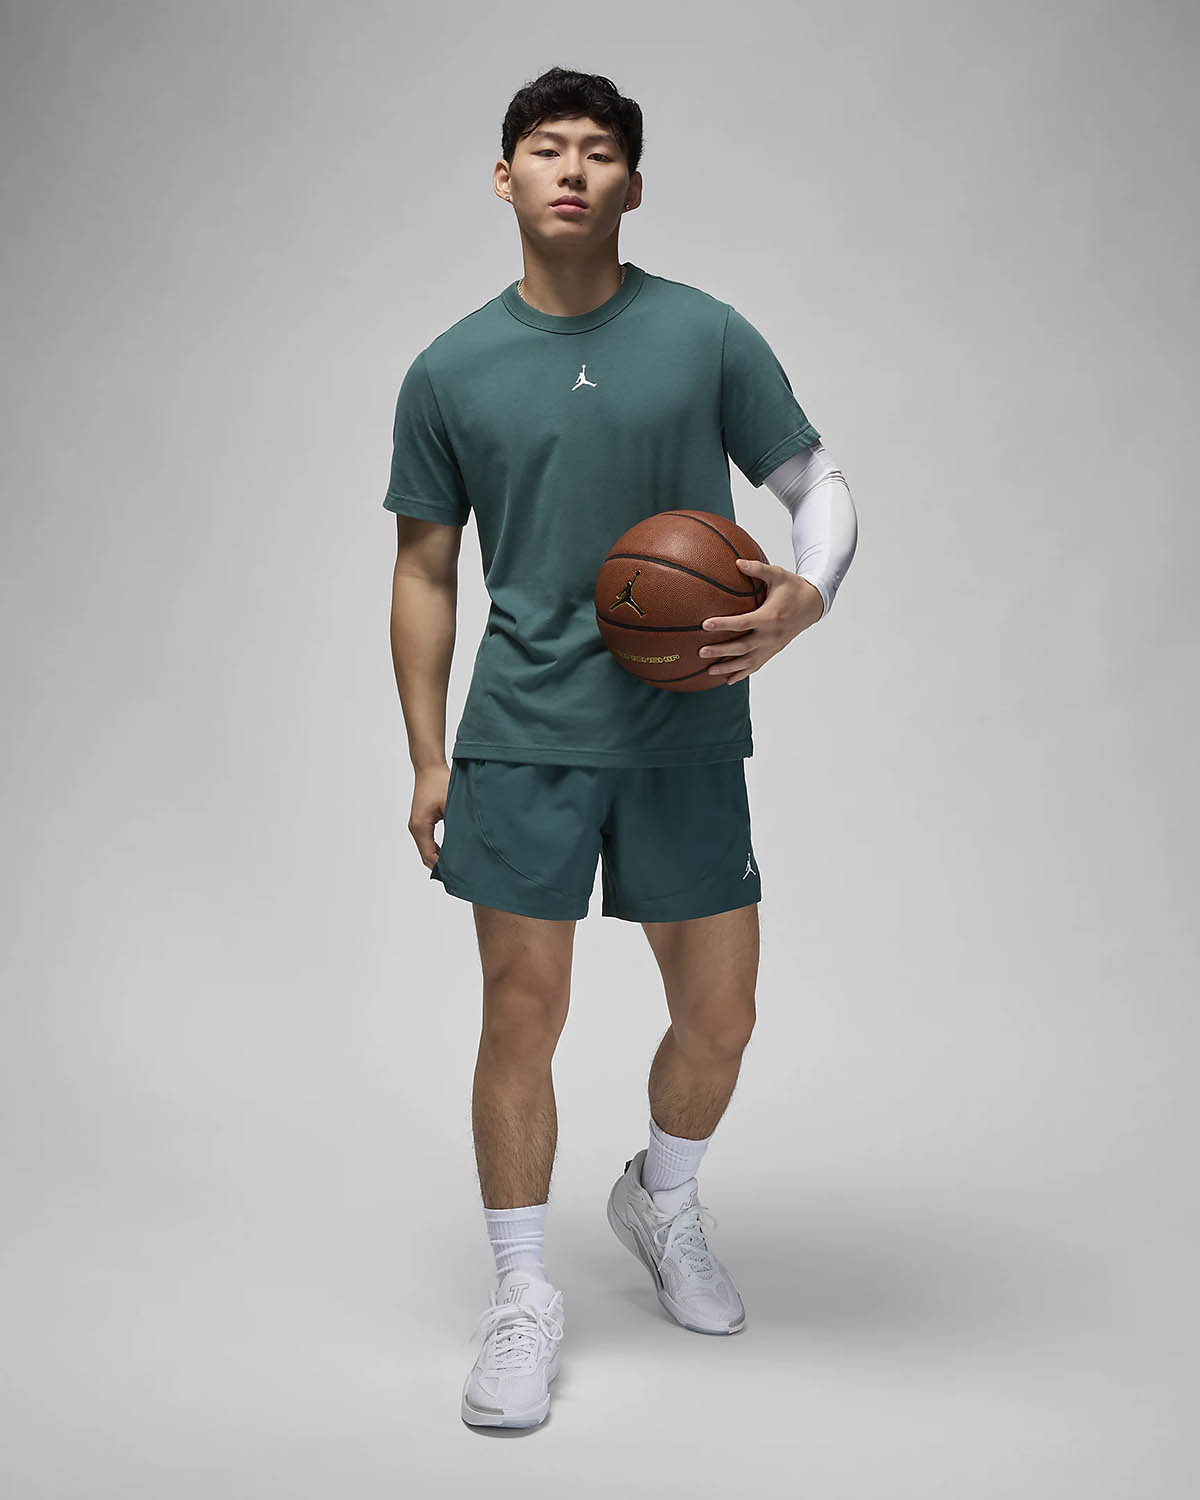 Jordan Sport Dri Fit Shirt and Shorts Oxidized Green